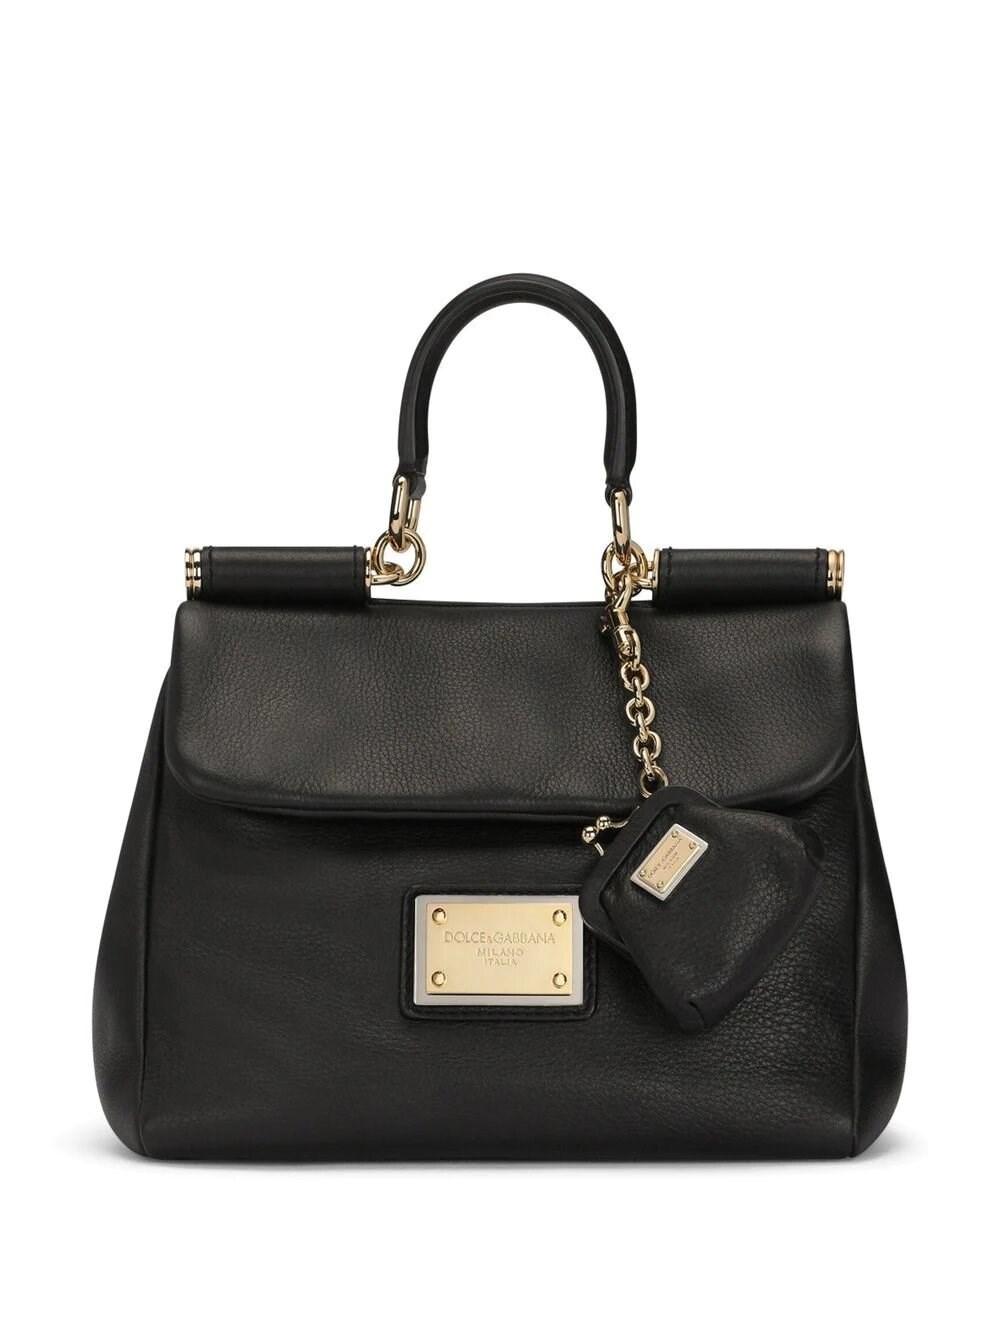 Dolce & Gabbana Small Calfskin Sicily Soft Bag in Black | Lyst